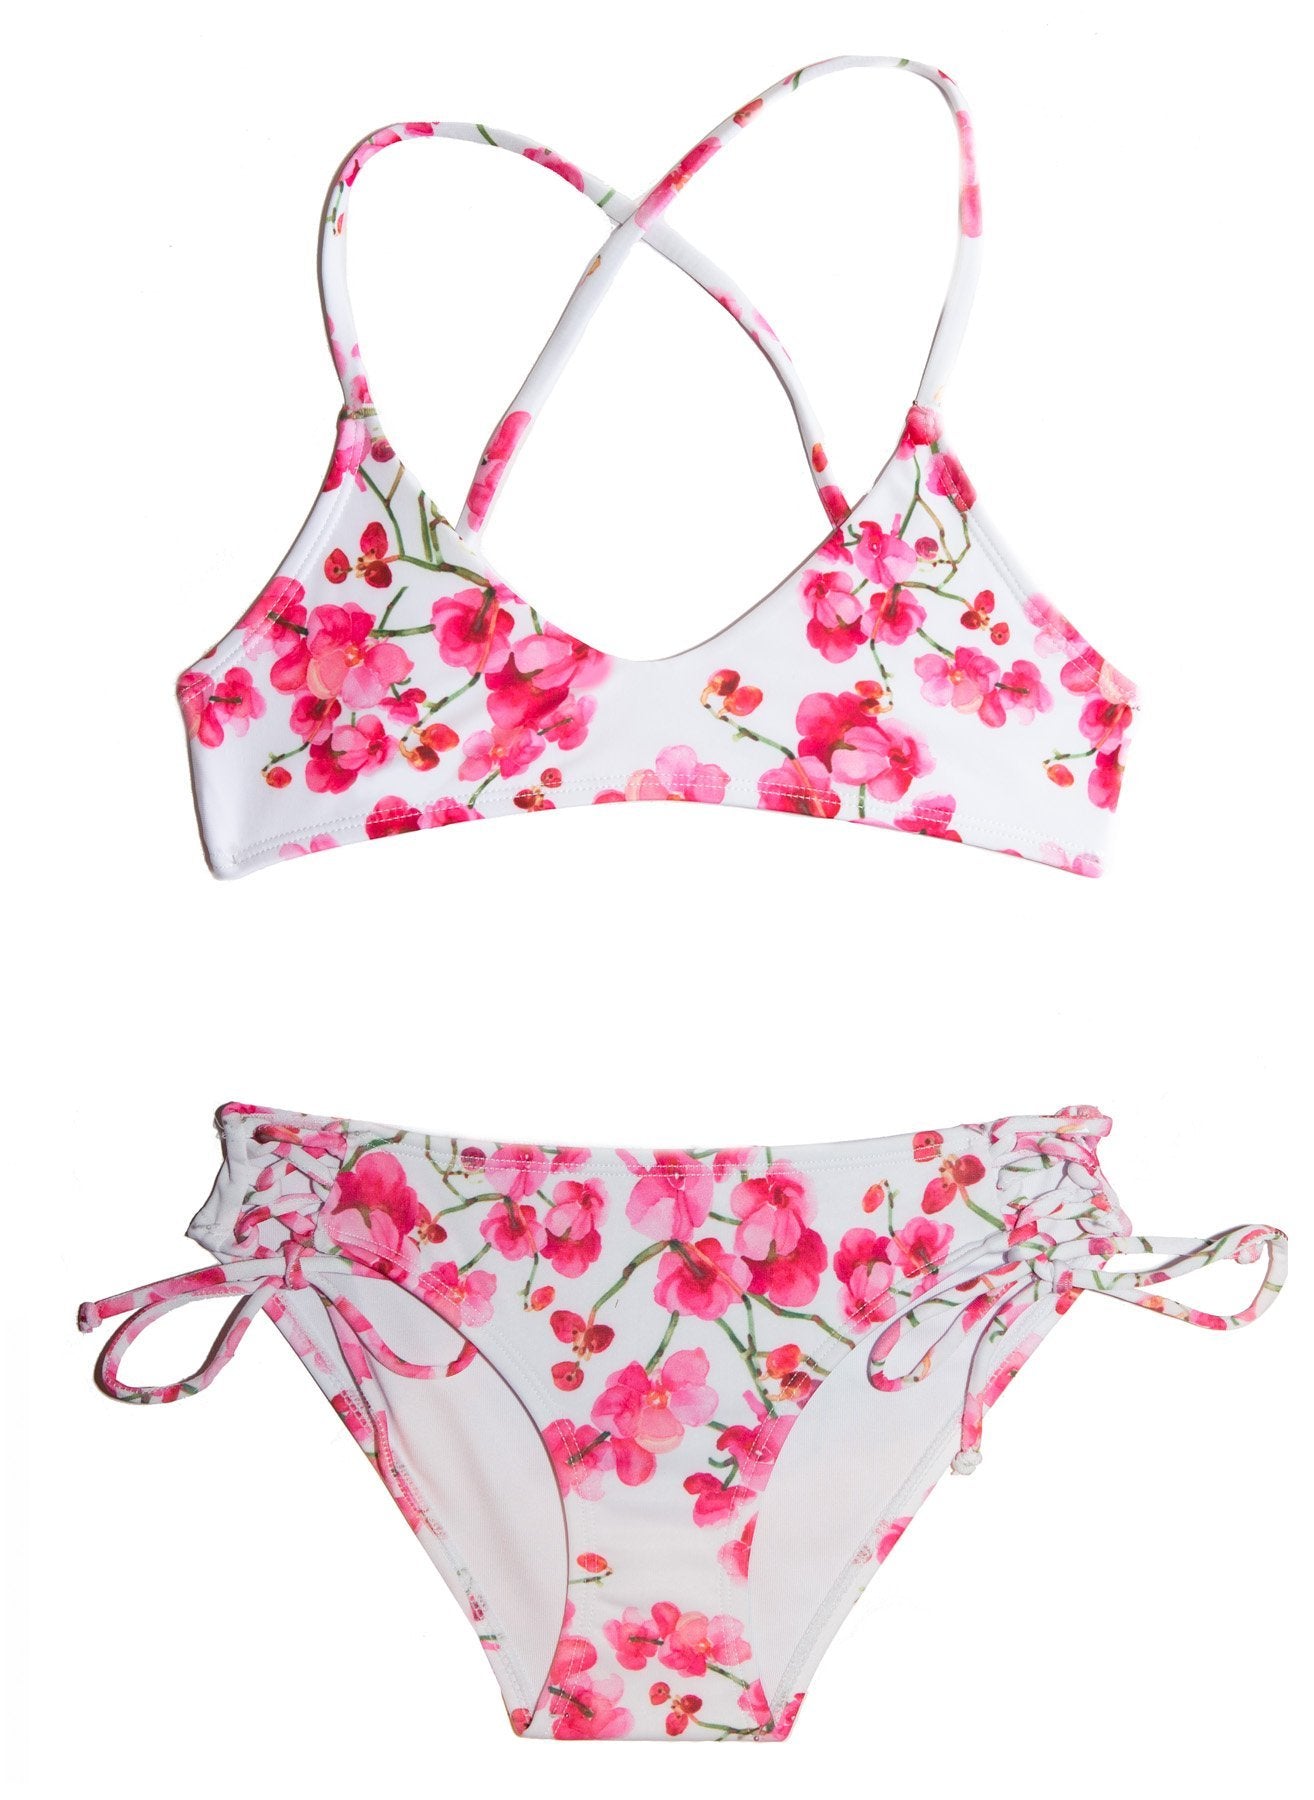 Chanceloves Pink Cherry Blossoms 2 Piece Padded Bikini Girls Sizes 7 14